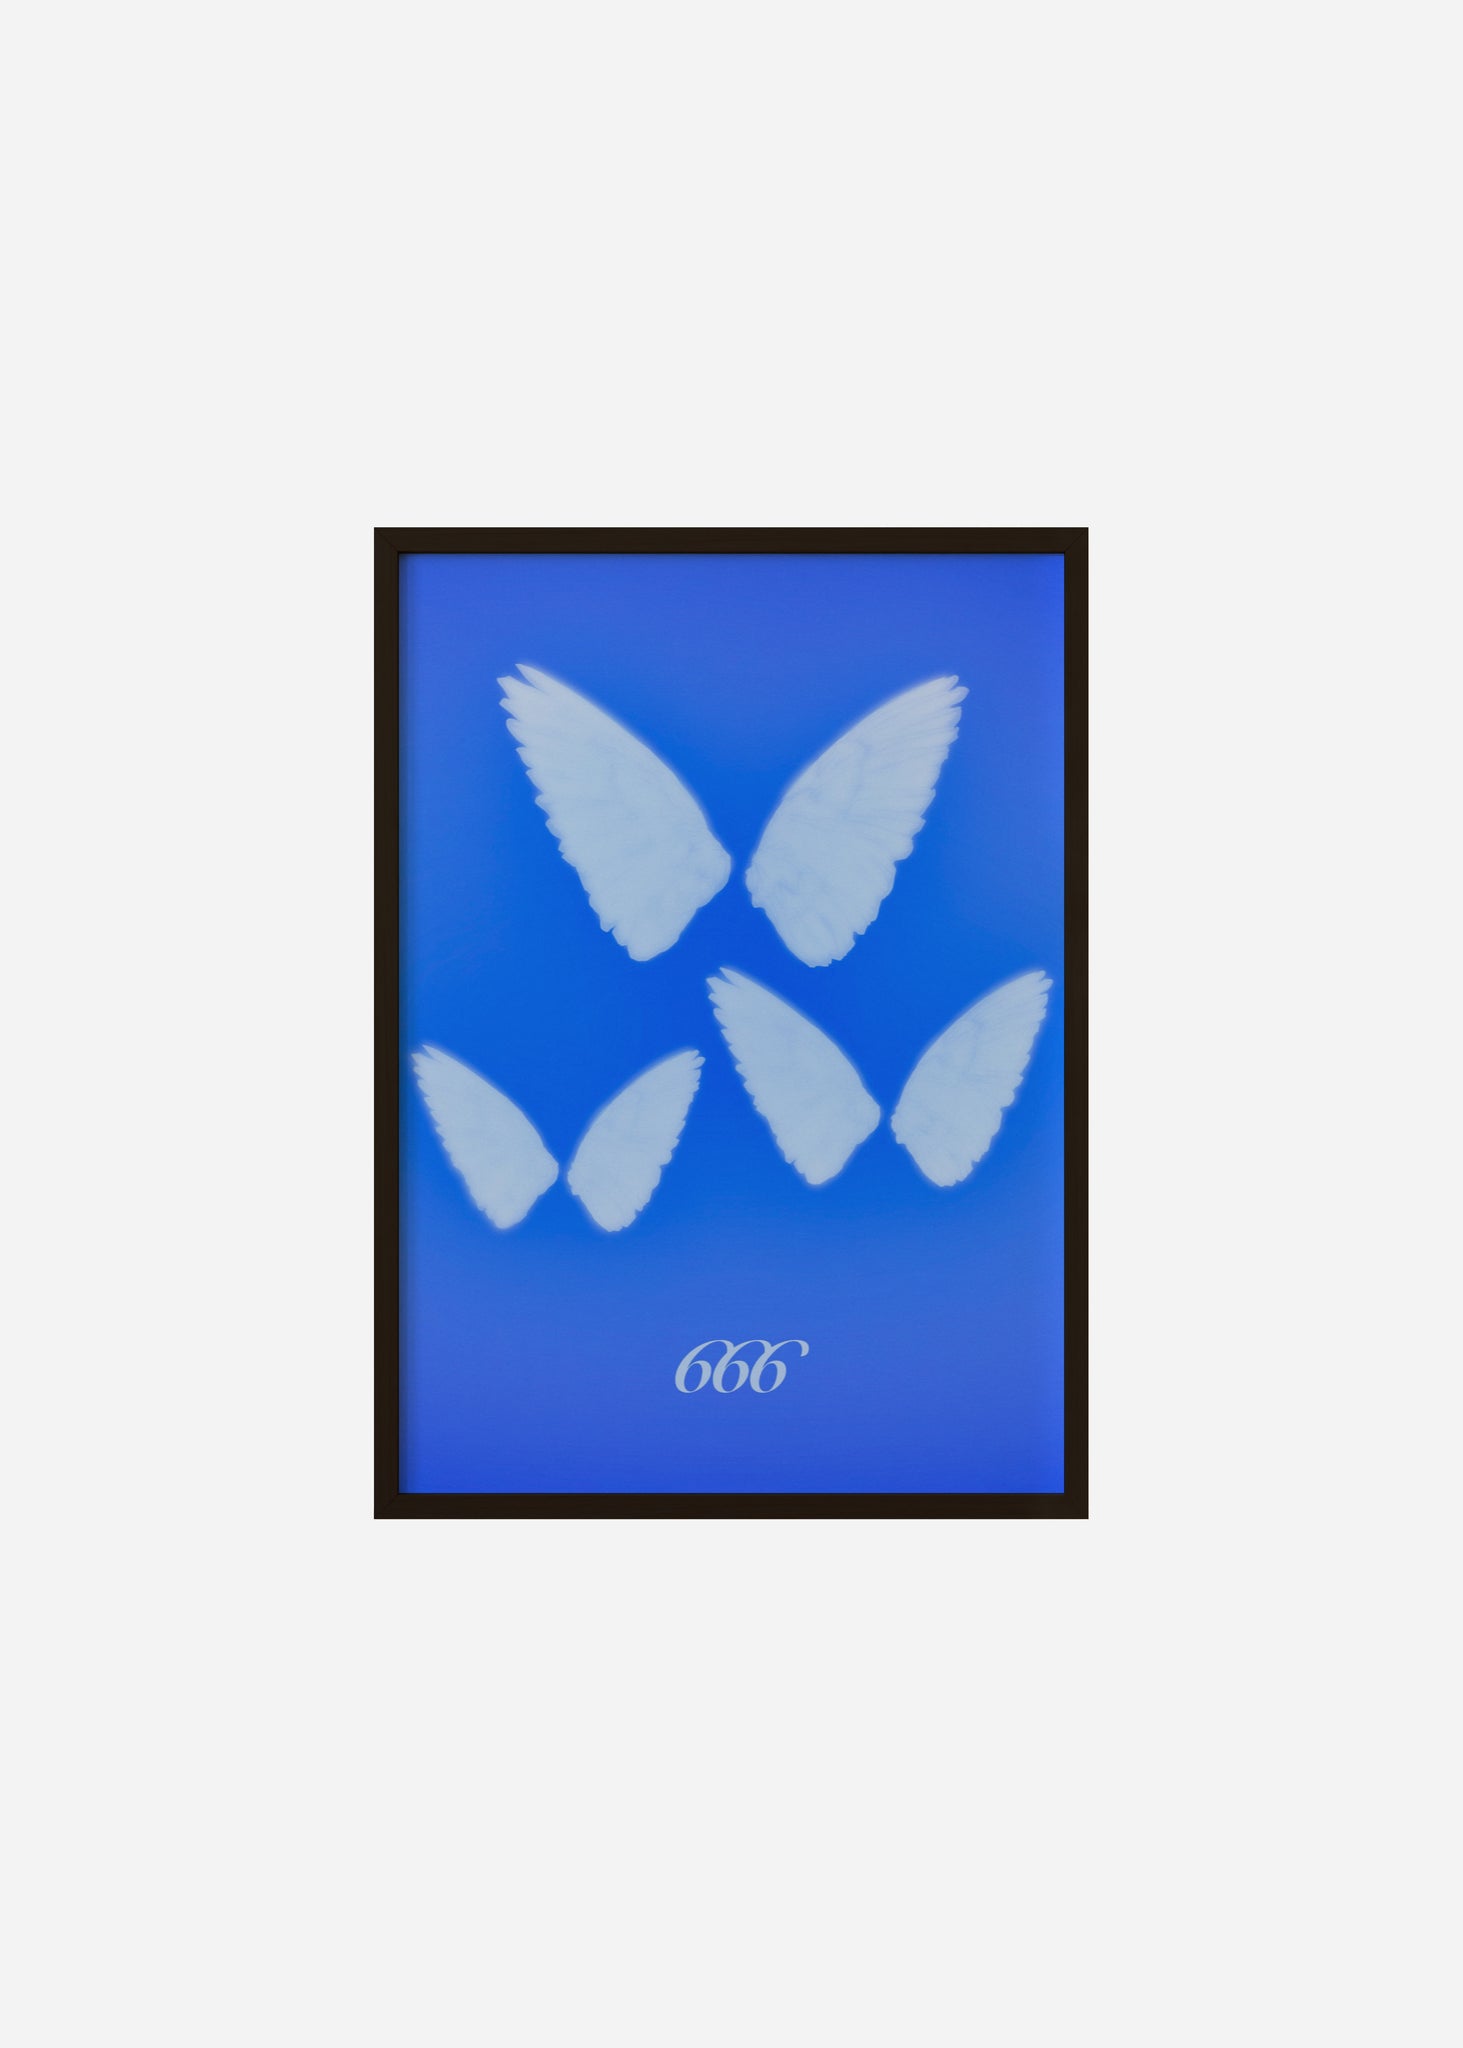 Angel Wings 666 Framed Print